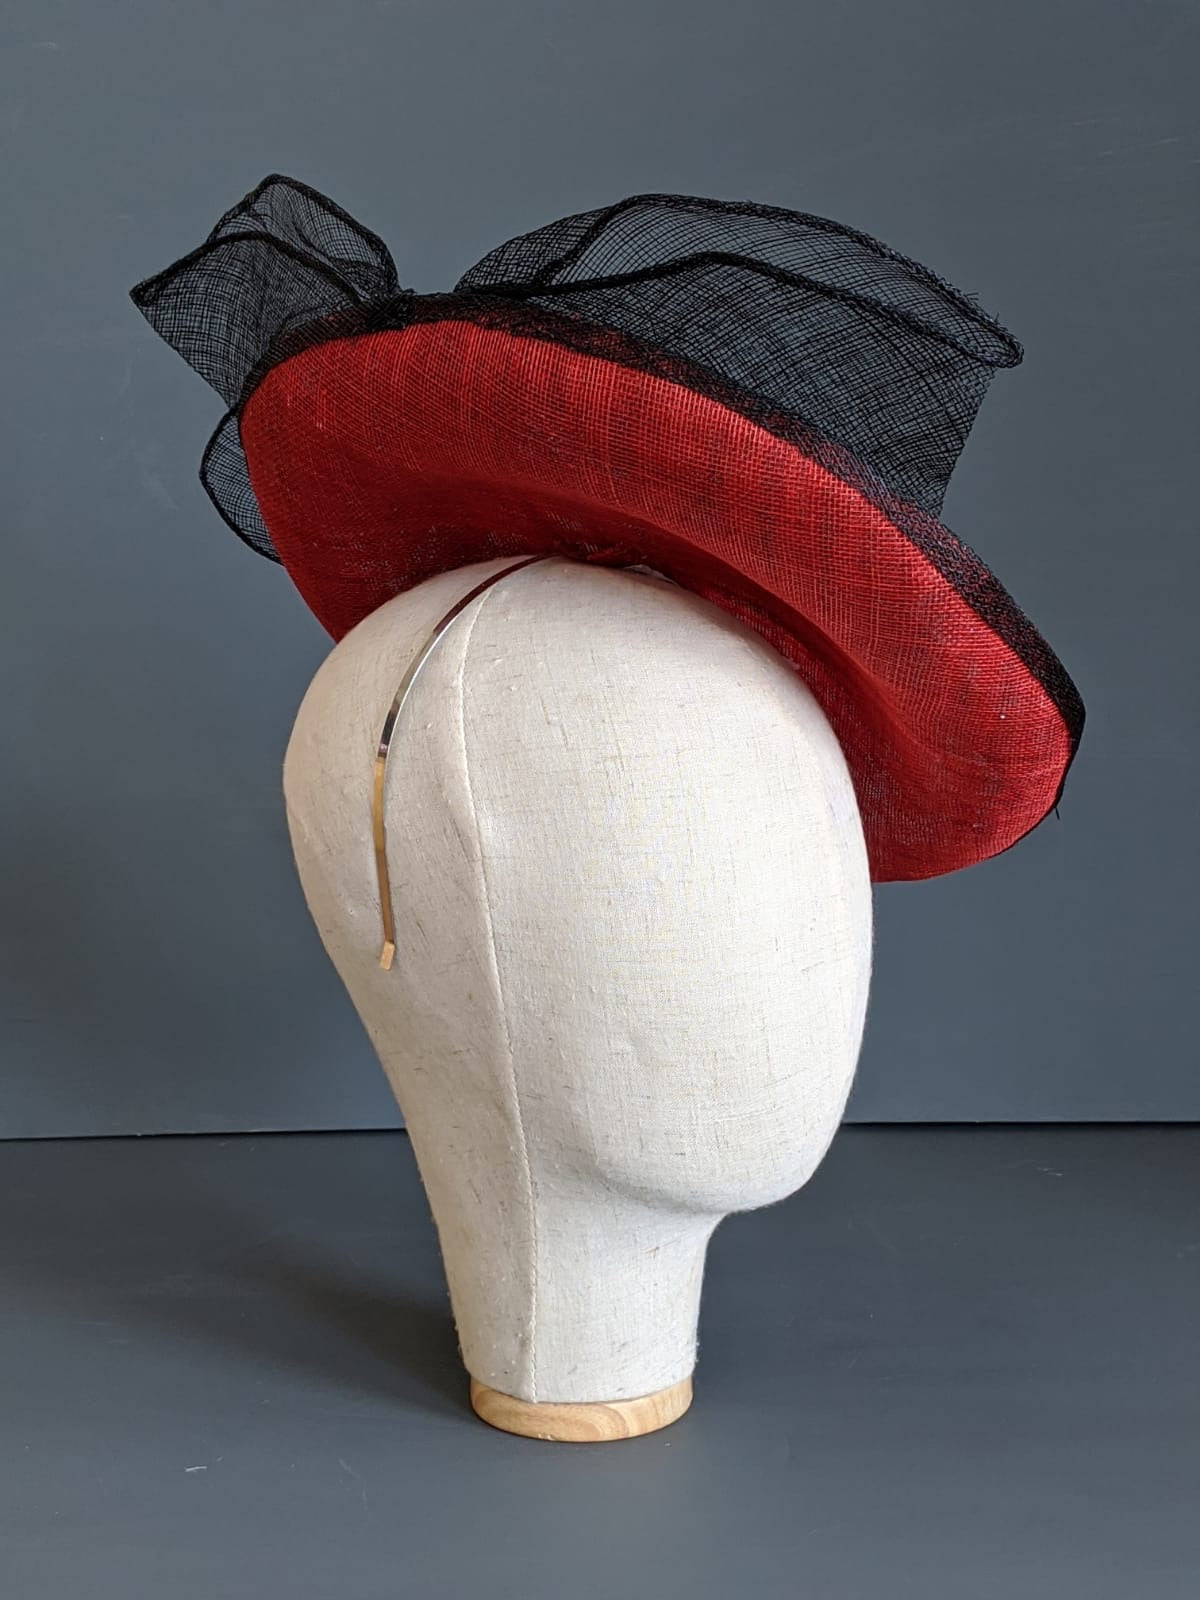 Ladies Original Bespoke British Handmade Red and Black Head Piece